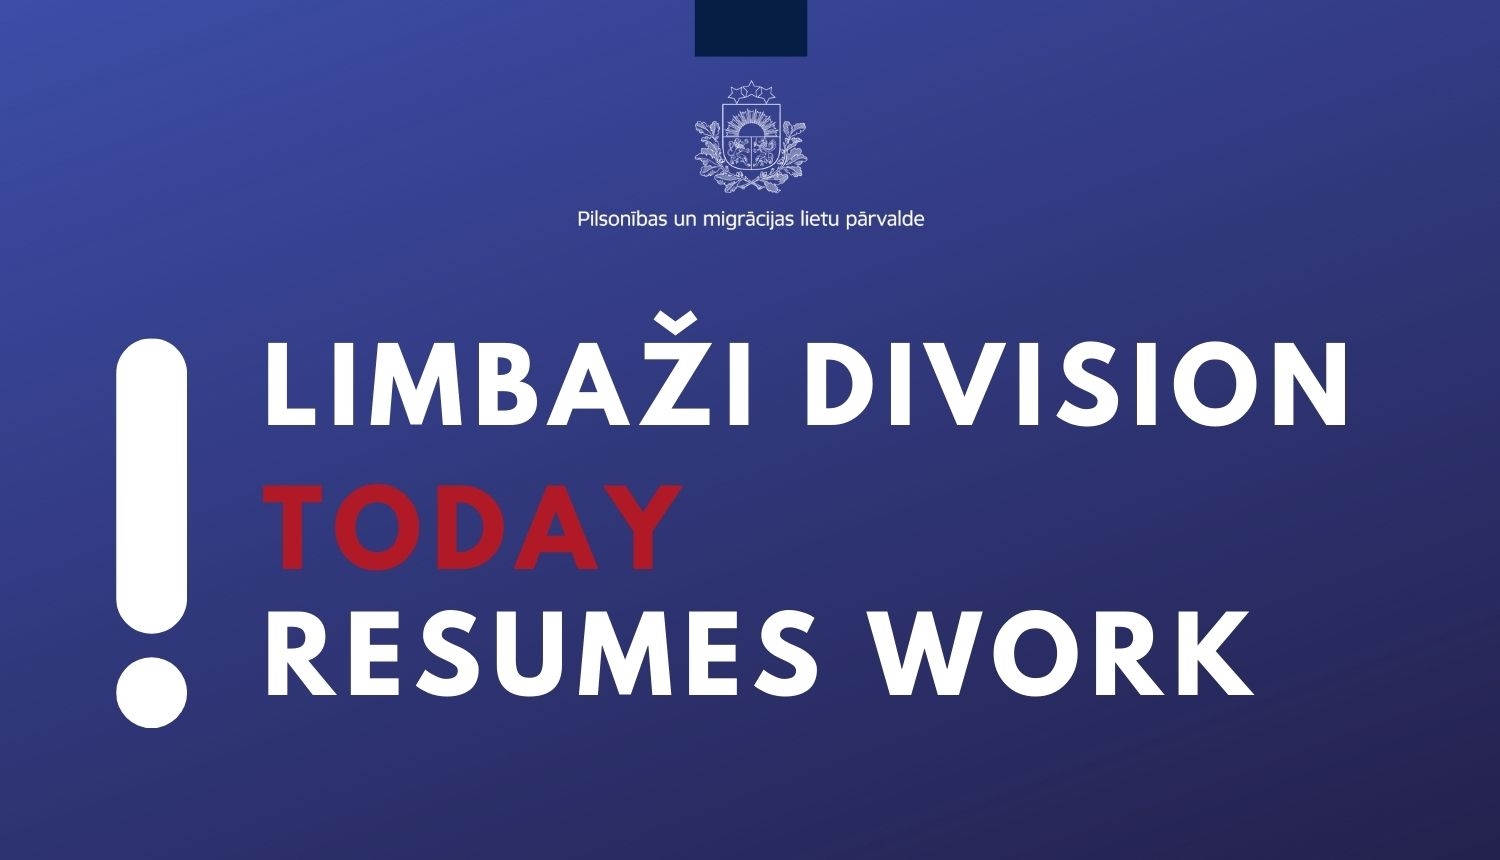 Text: "Limbaži division today resumes work"